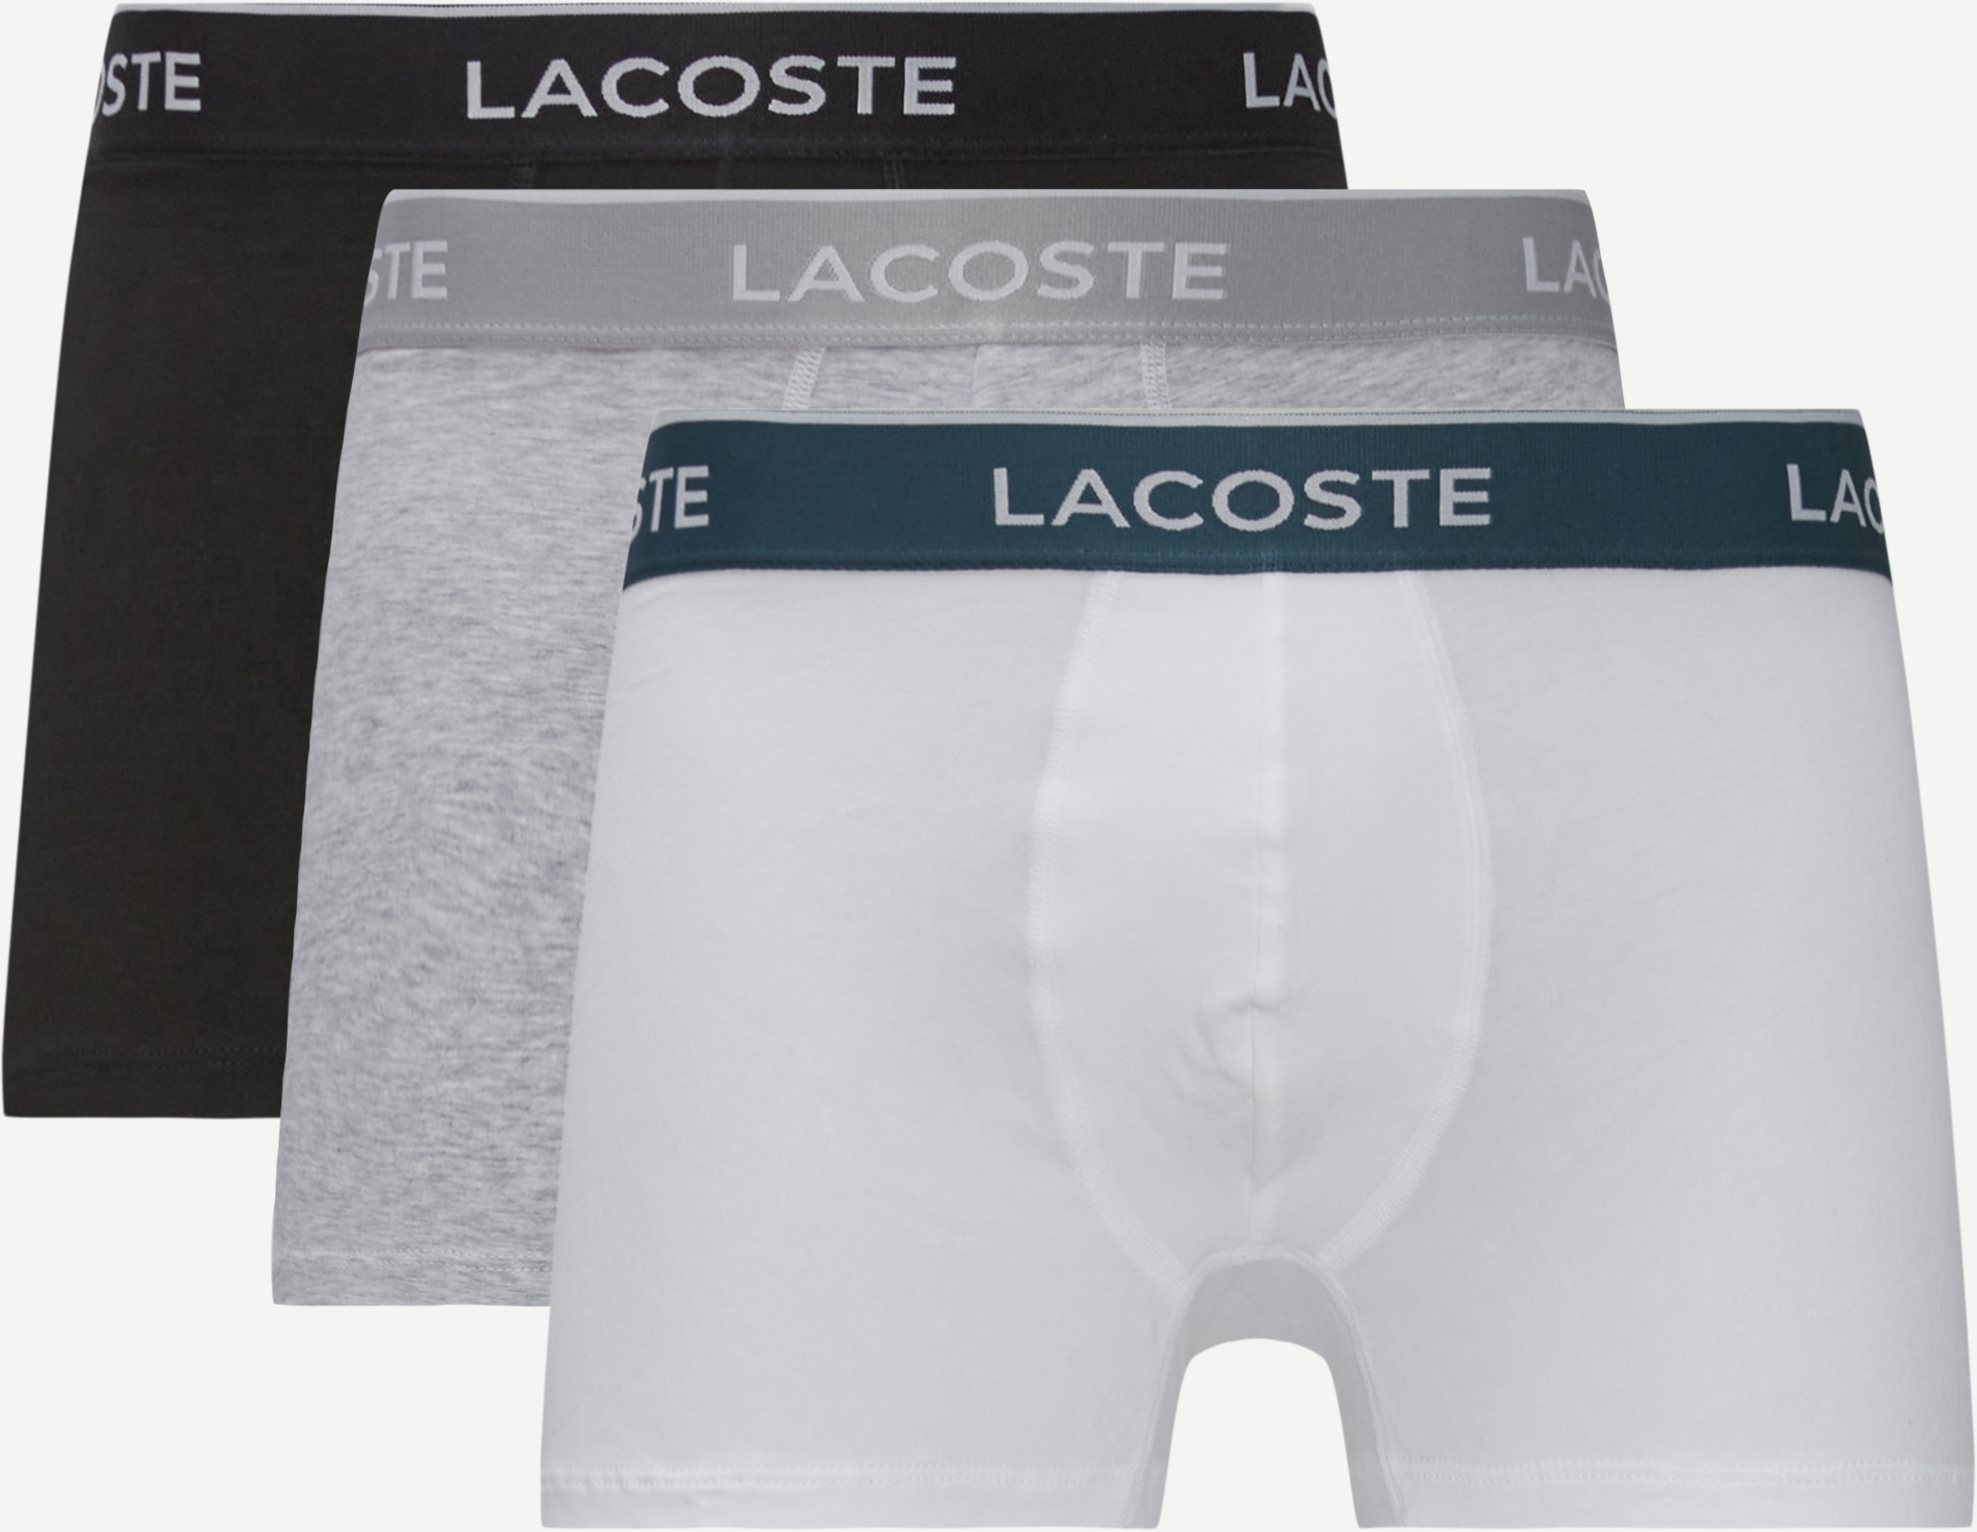 Lacoste Underwear 5H3389 Multi